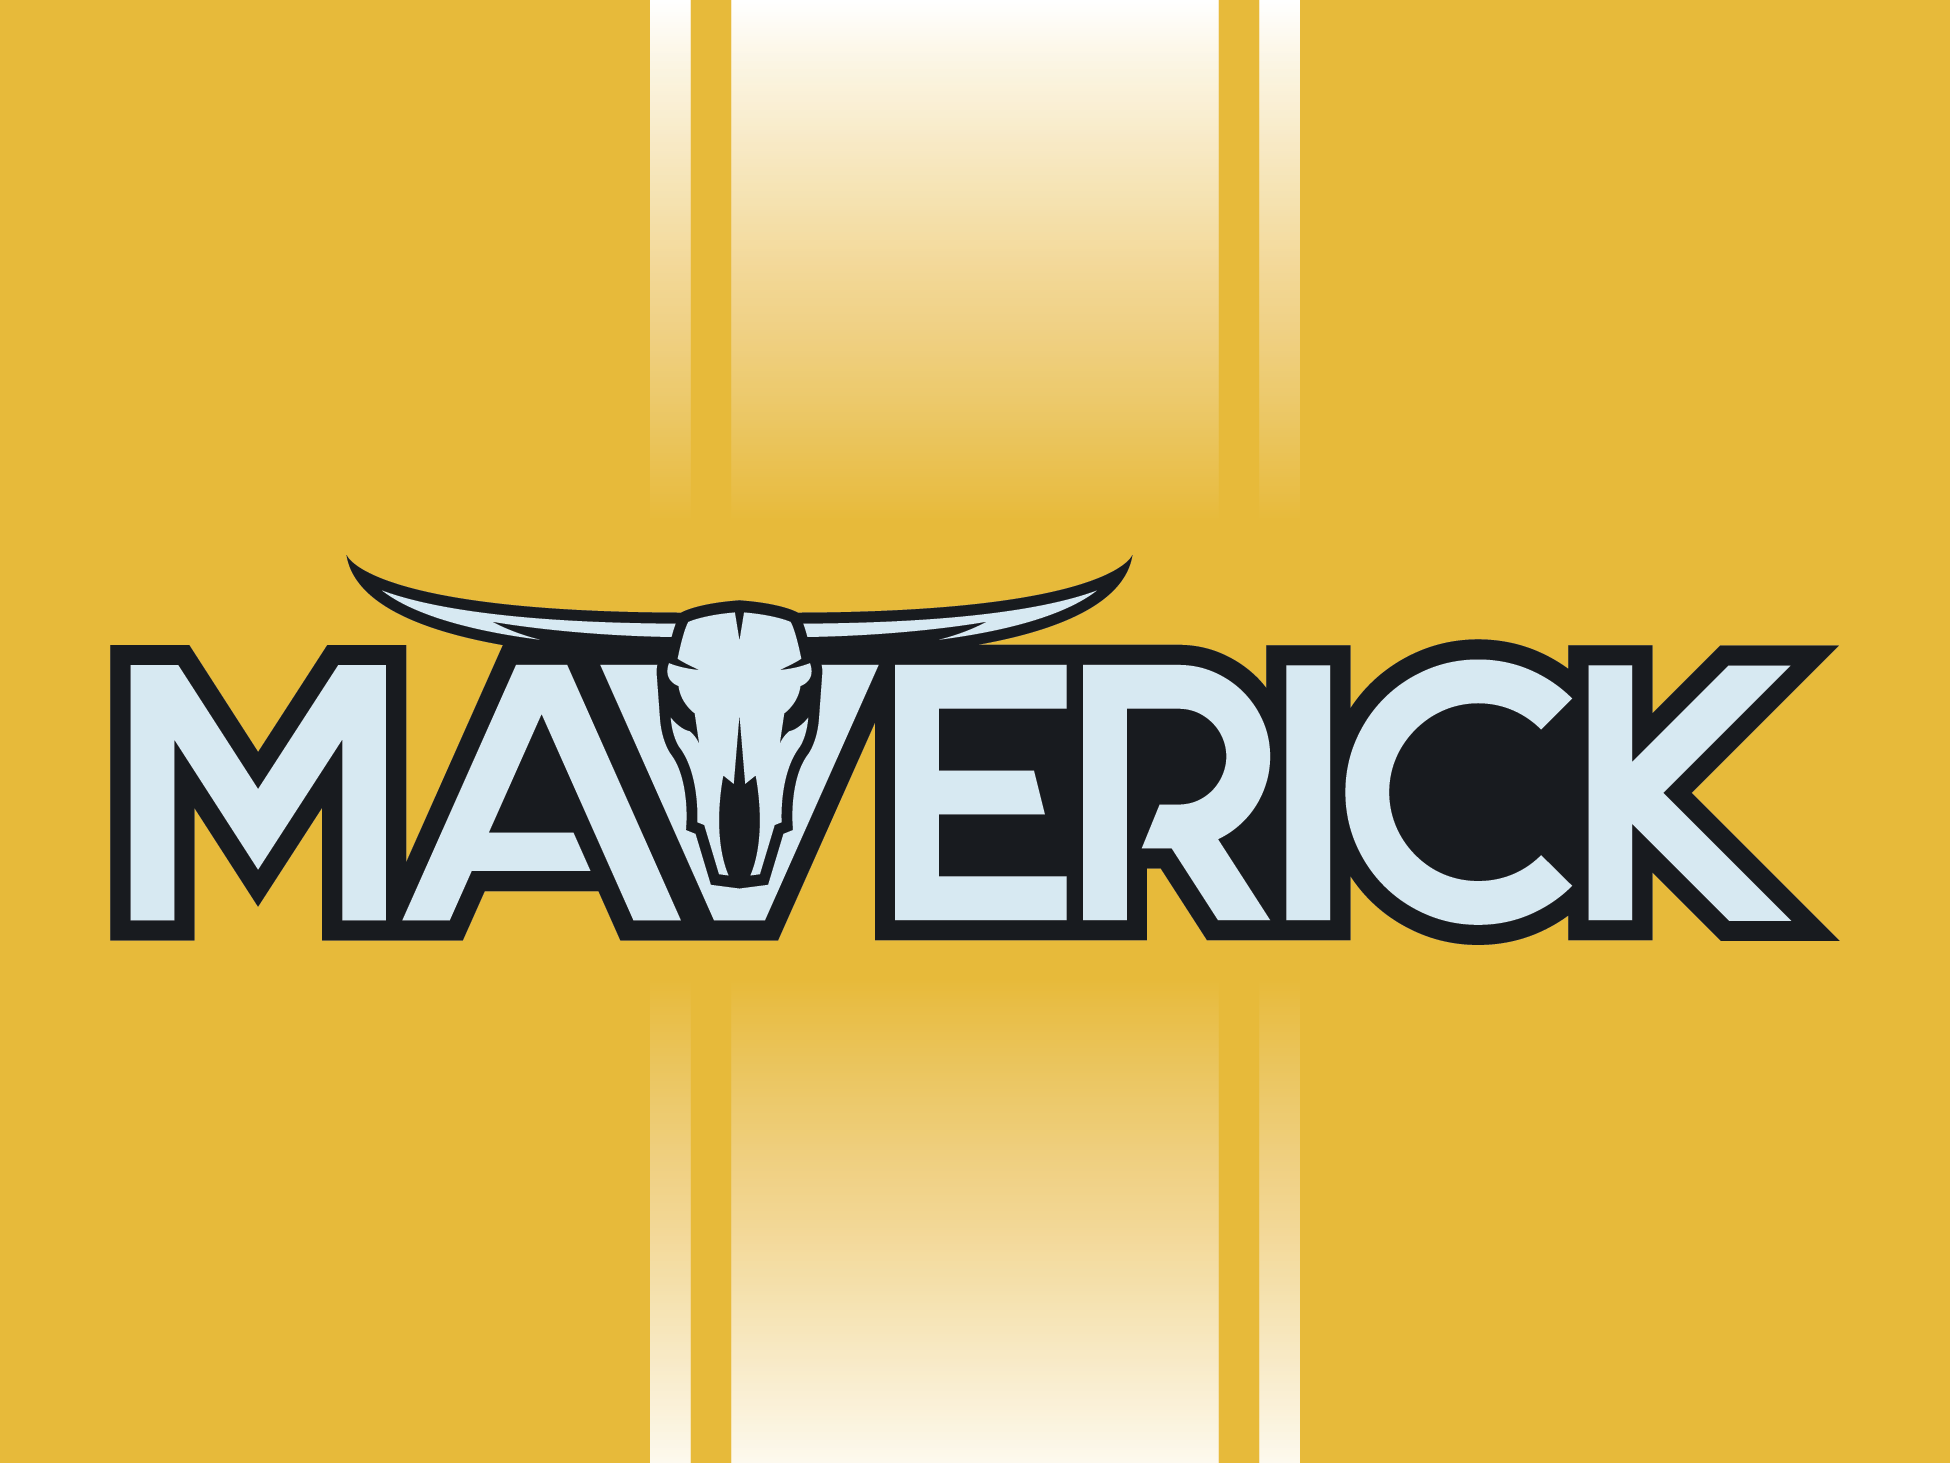 Top gun maverick logo by DracoAwesomeness on DeviantArt